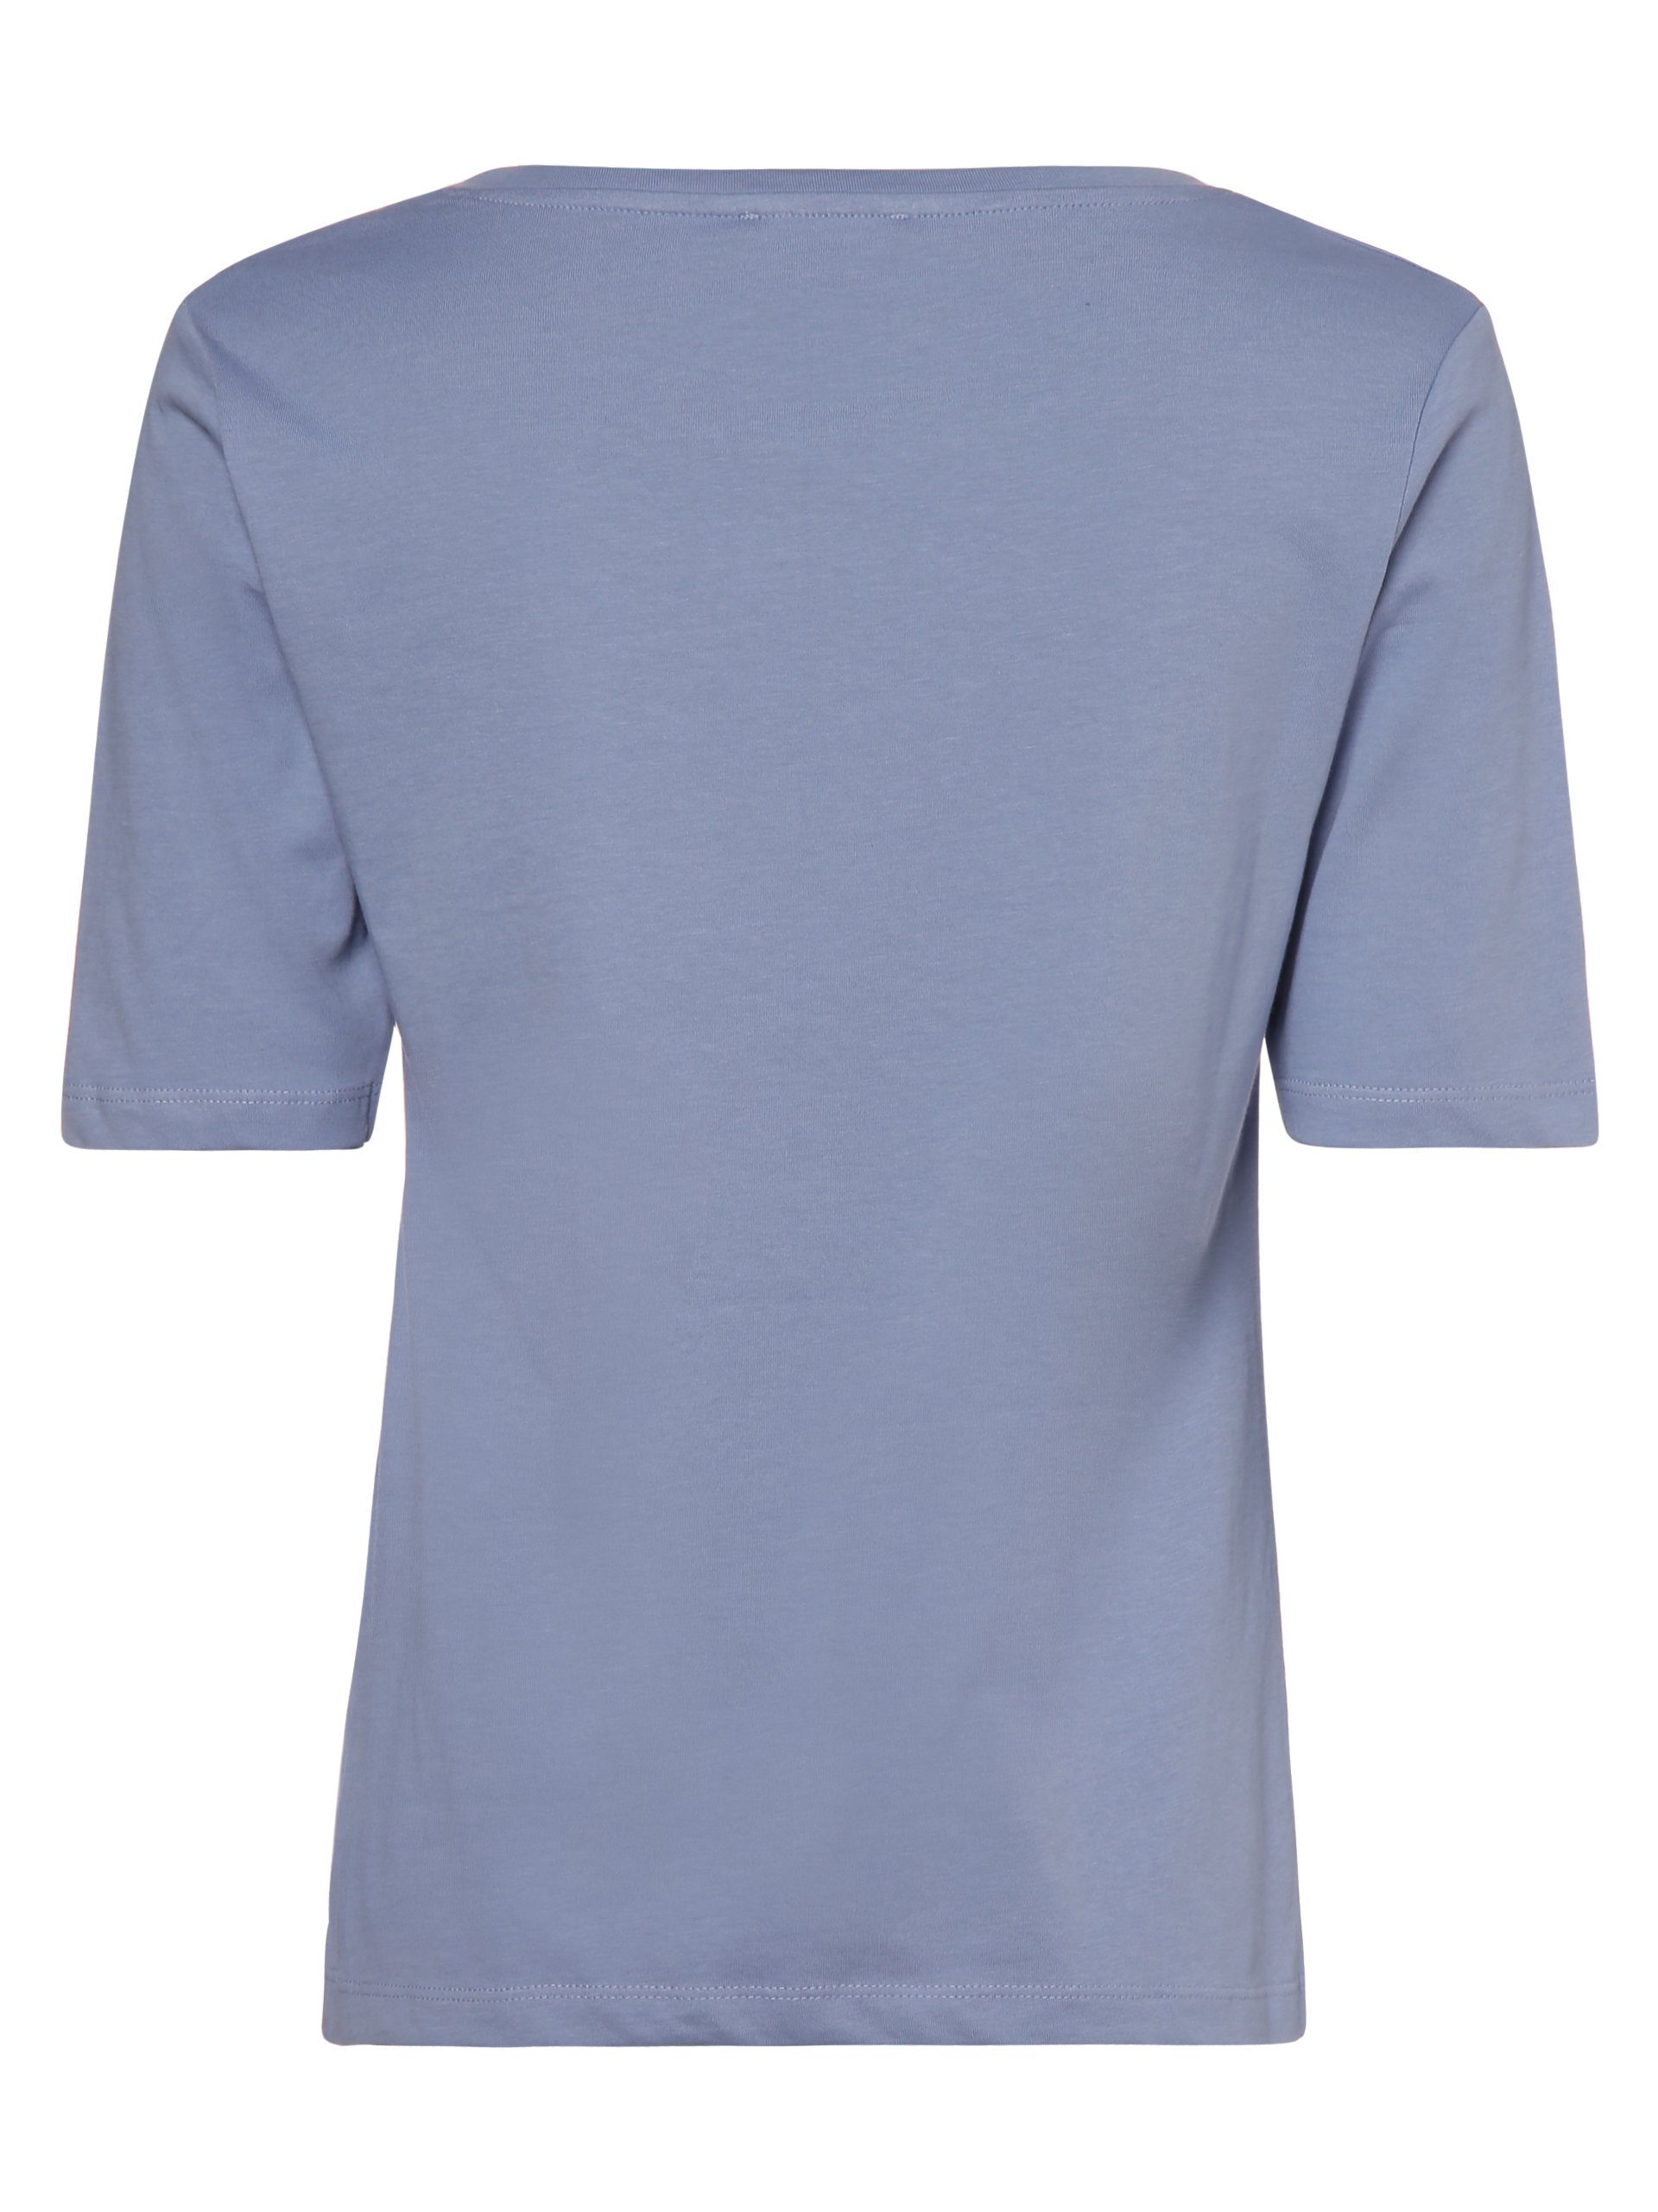 Callegari T-Shirt hellblau Franco